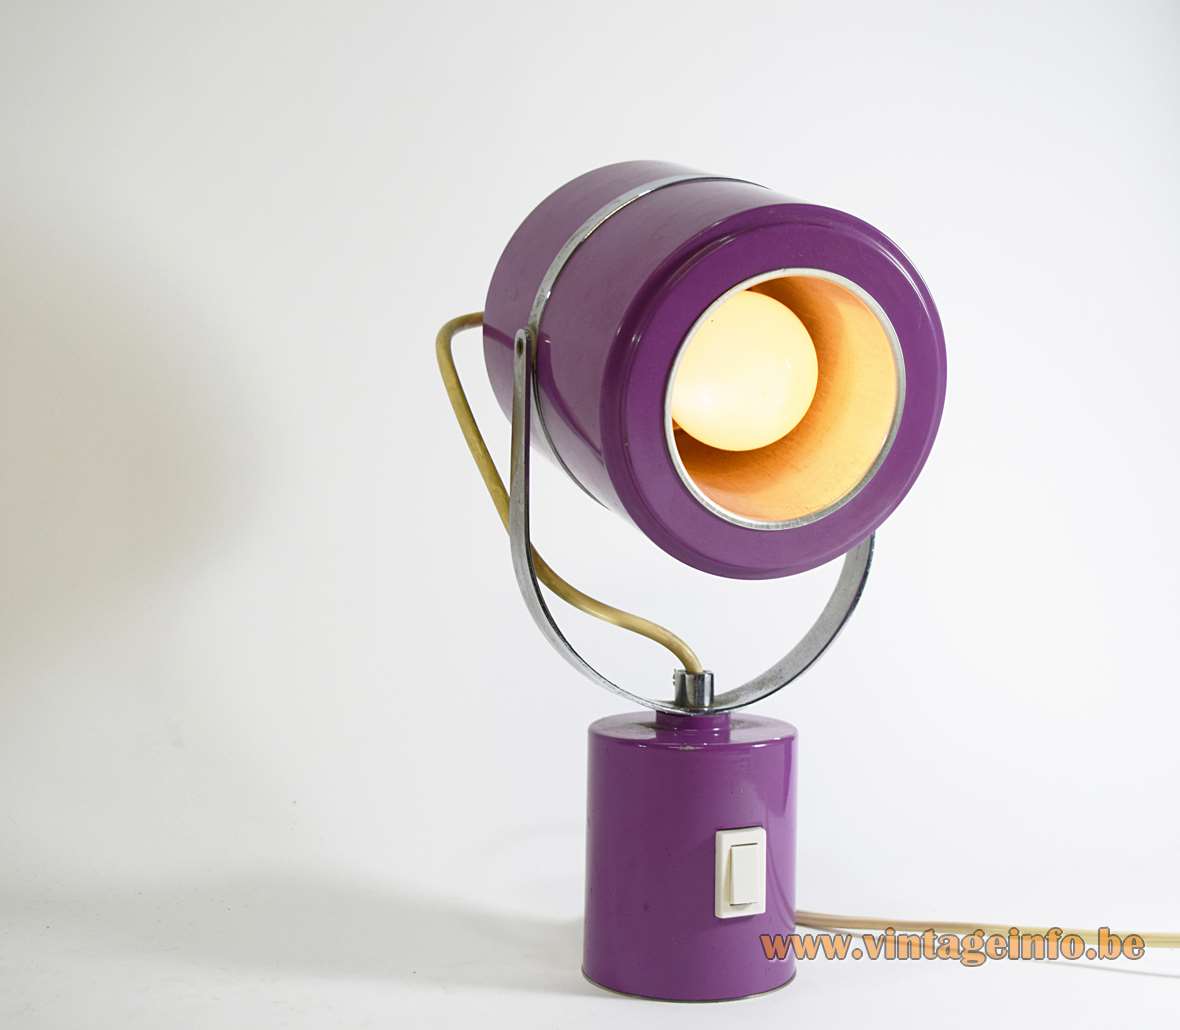 1970s Elma cylinder table lamp adjustable purple tubes chrome bar & ring aluminium reflector E14 socket Slovenia